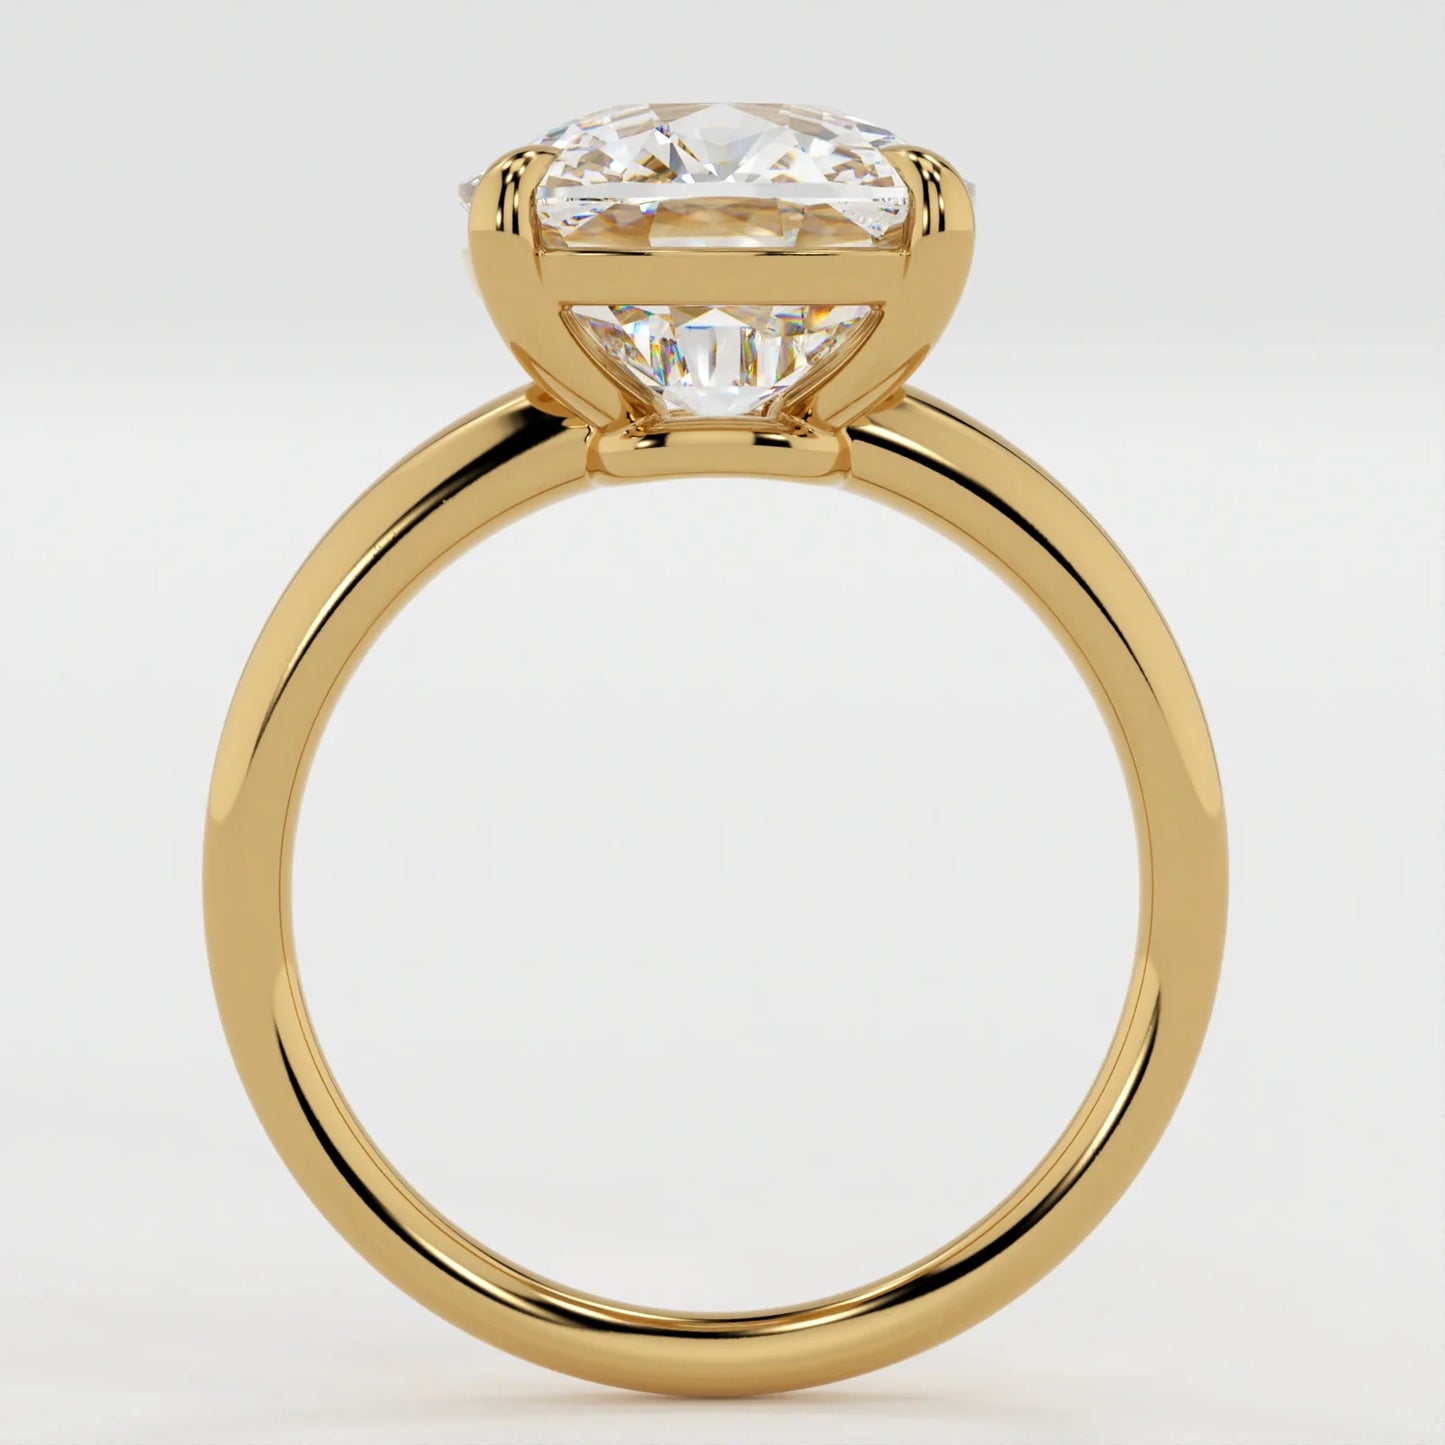 3 Carat Cushion Cut Moissanite Diamond Engagement Ring Solitare Band